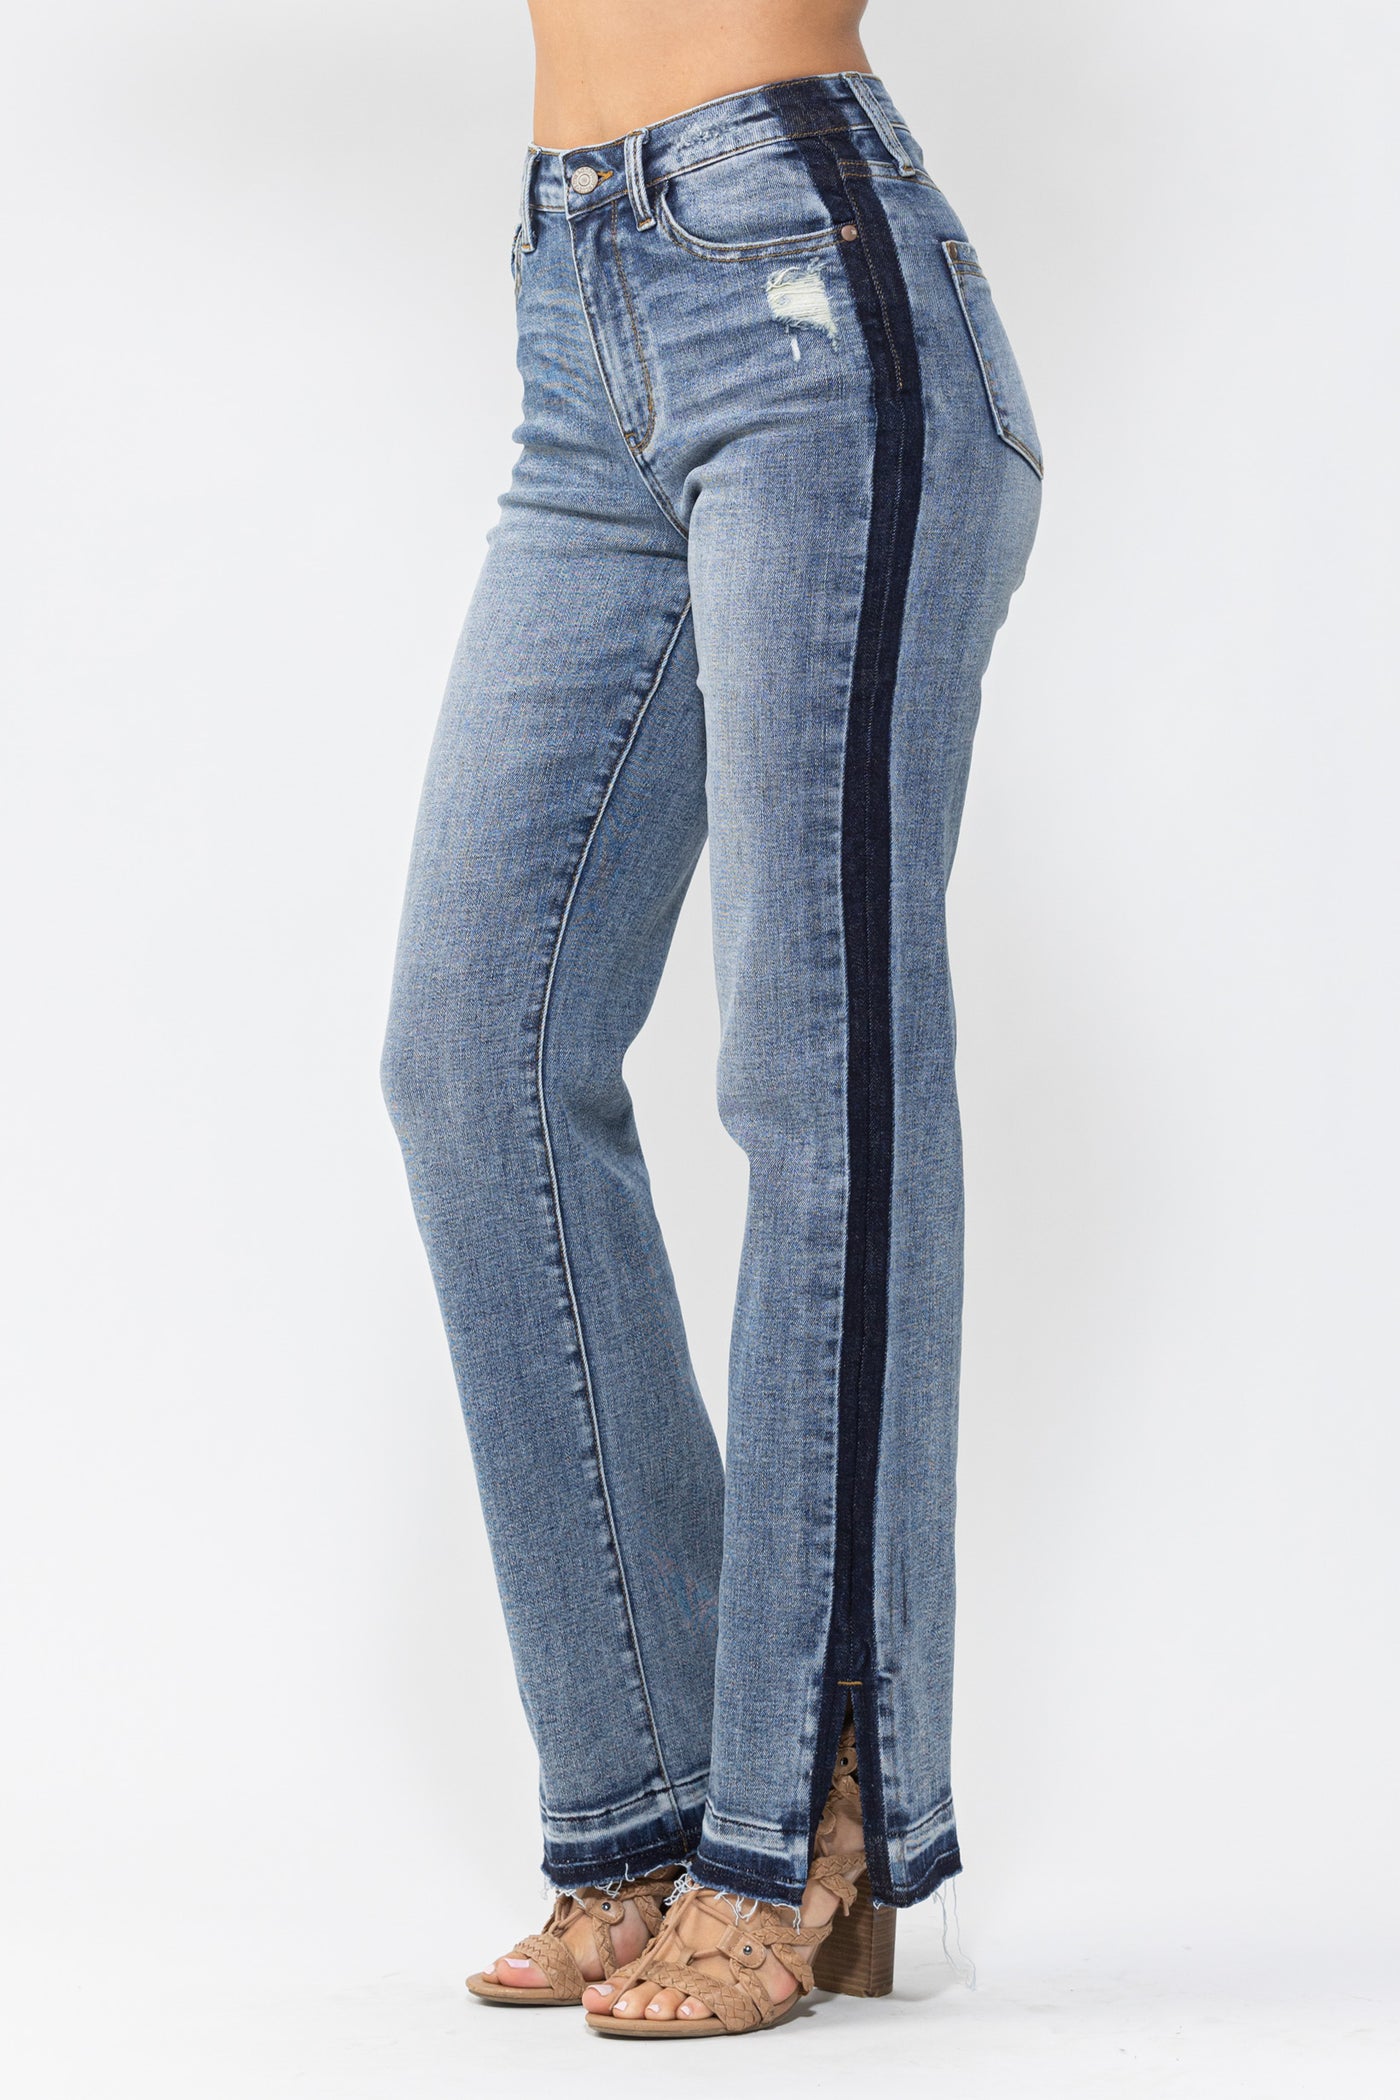 Judy Blue Jeans 88641